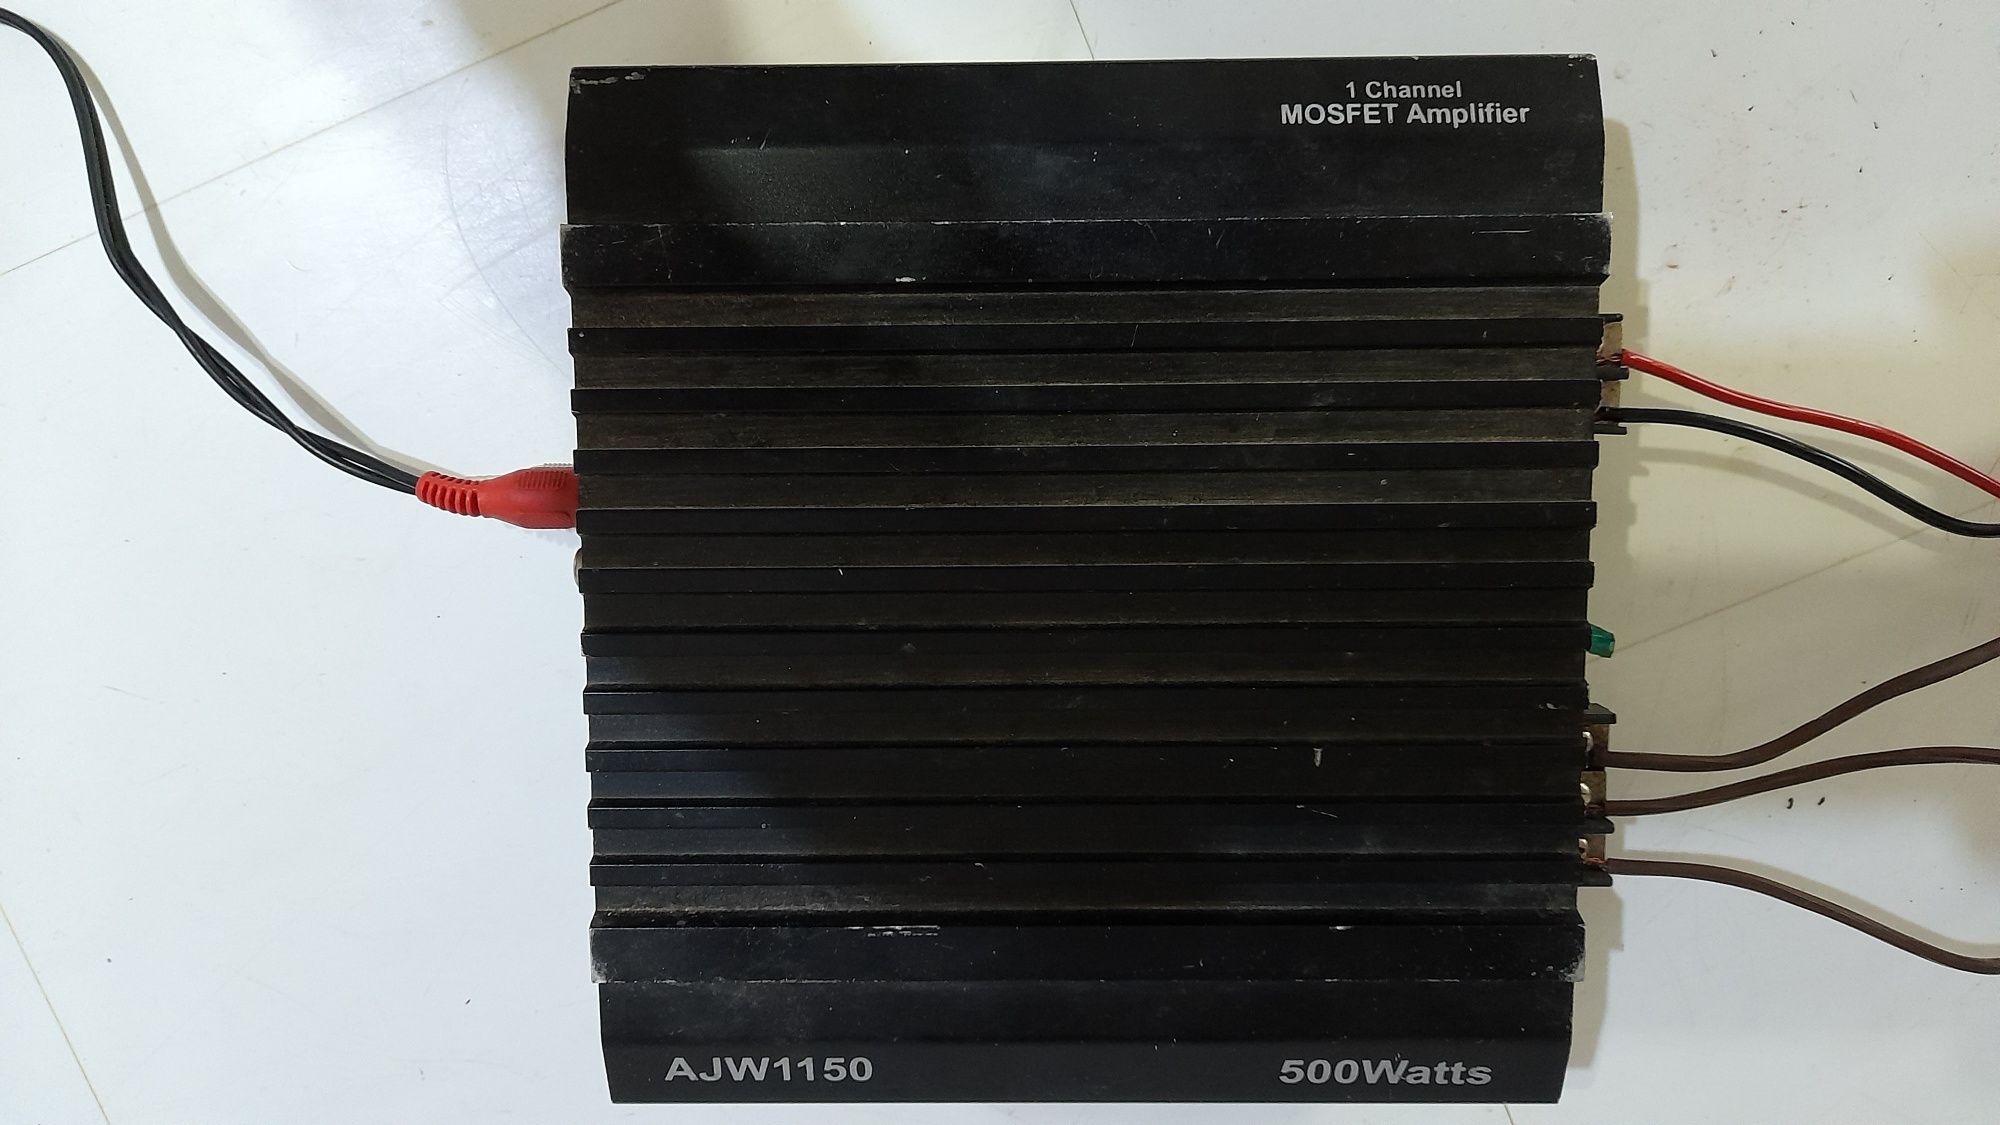 Mosfet amplifier AJW1150